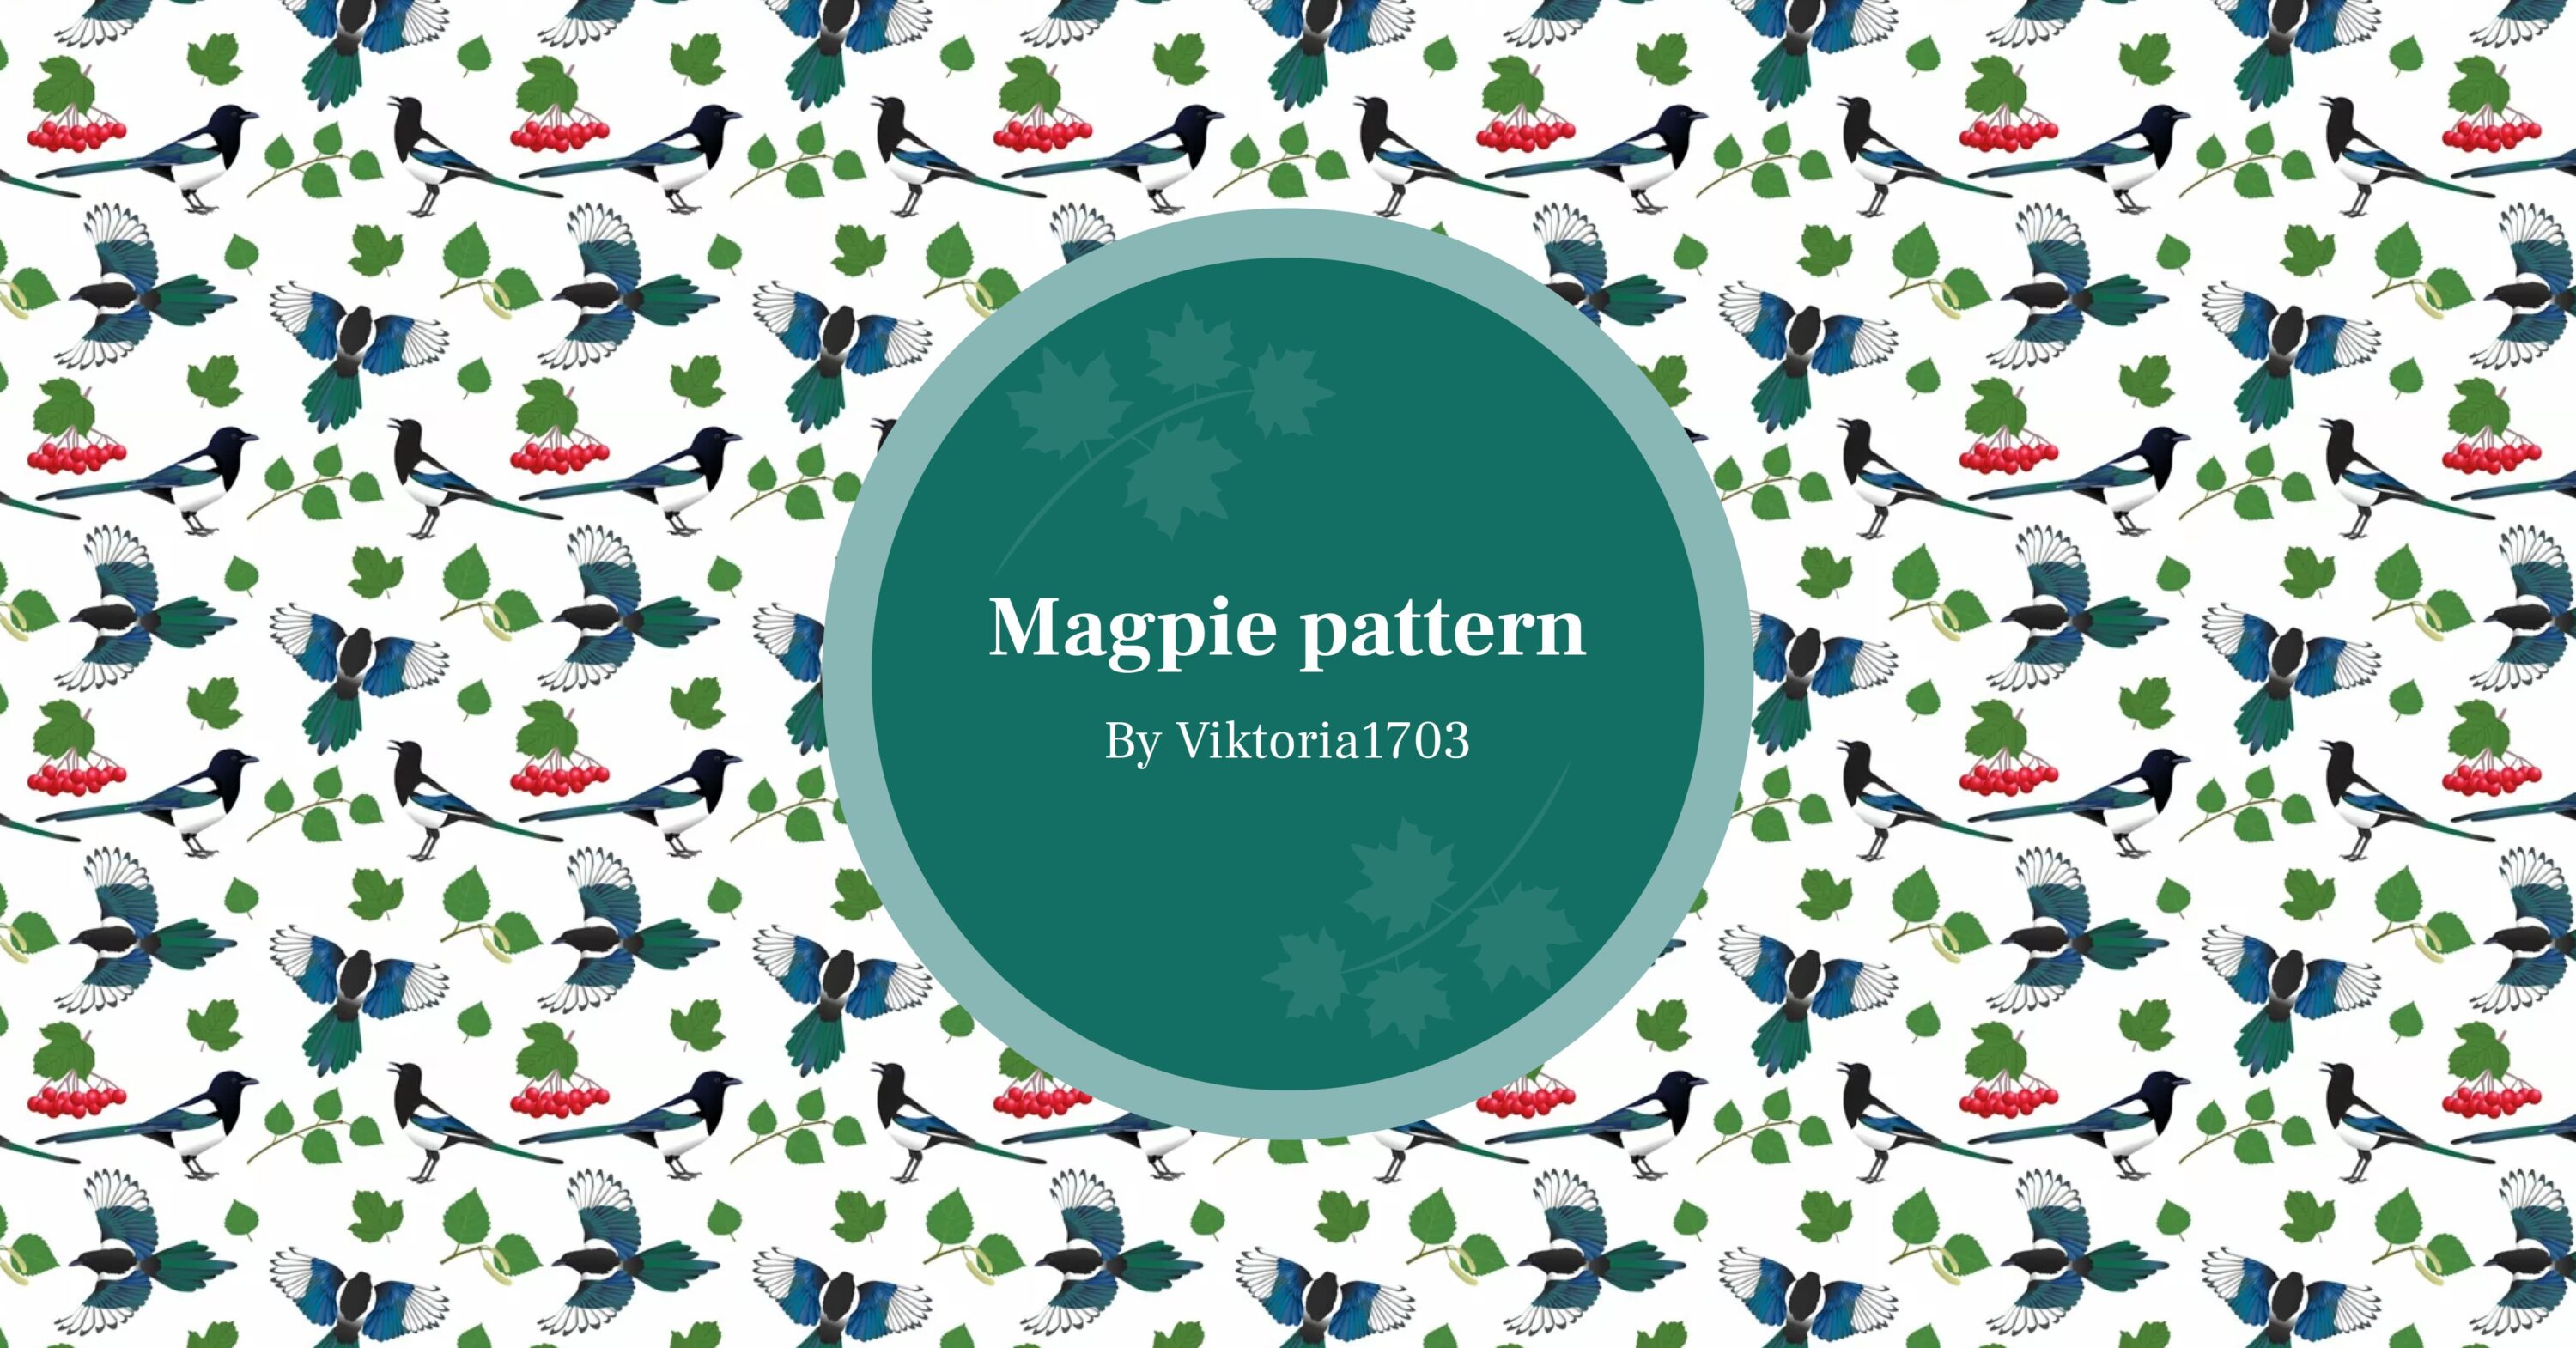 Magpie Pattern facebook image.